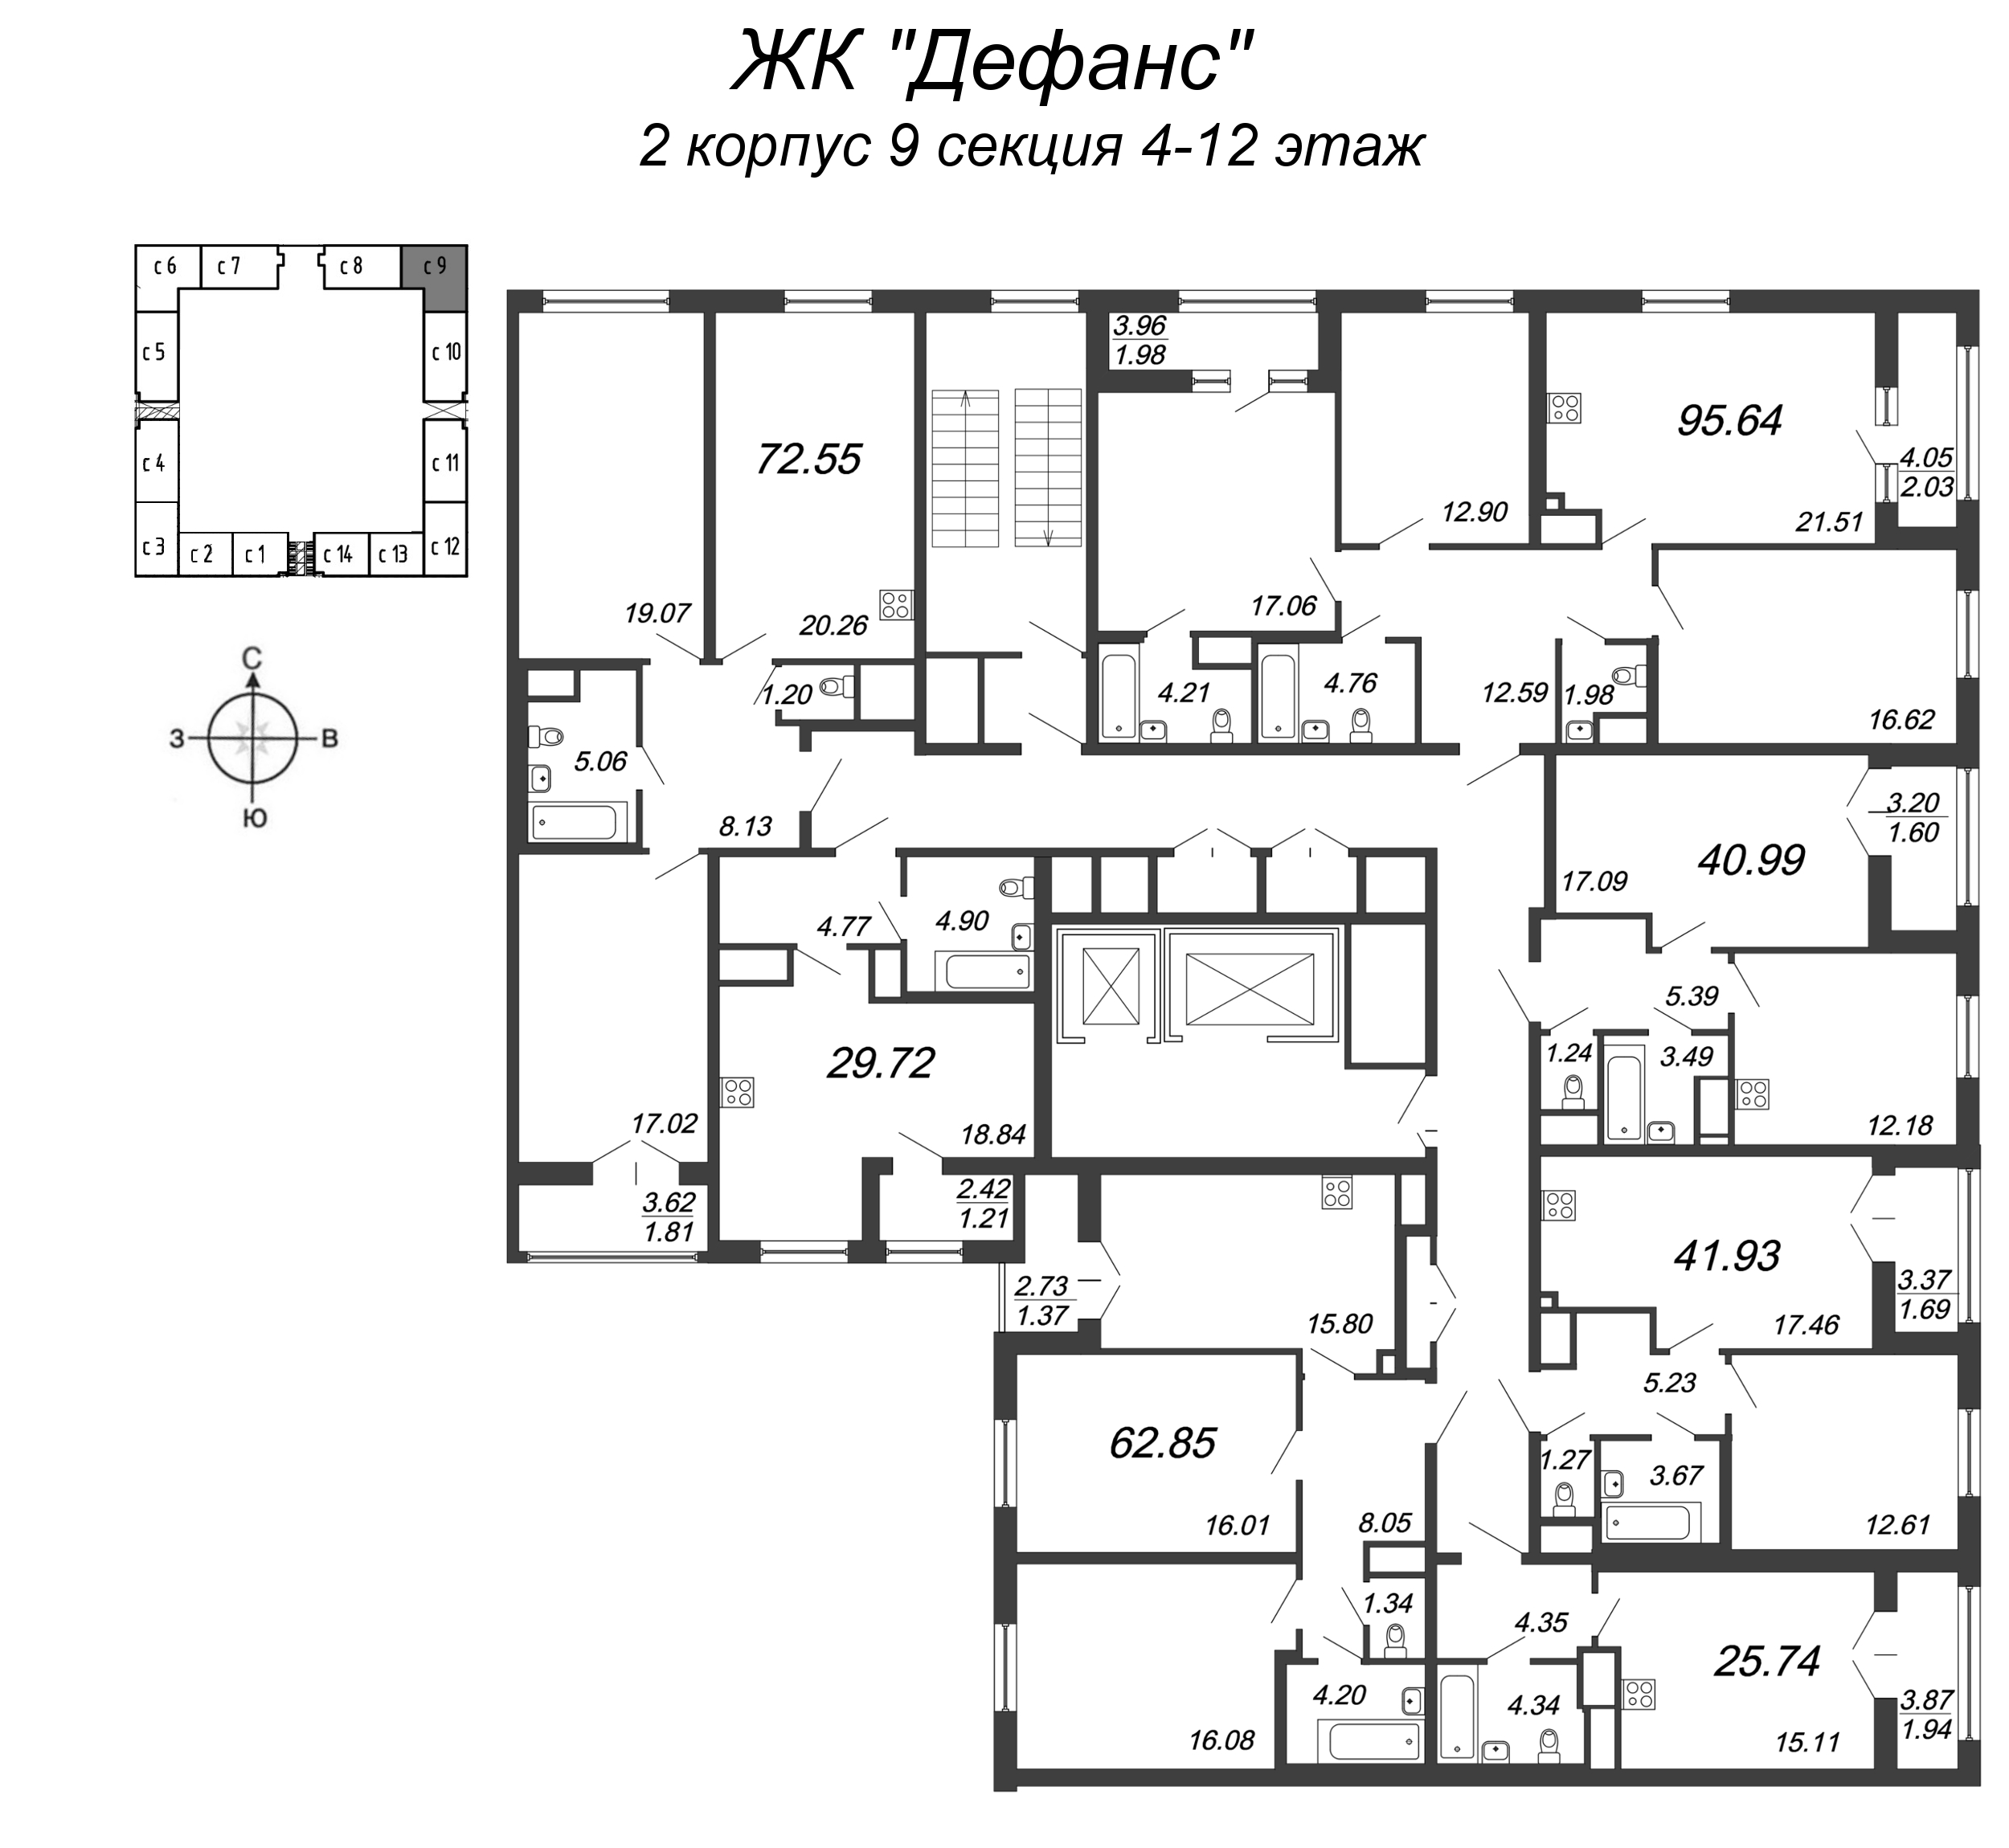 3-комнатная (Евро) квартира, 62.85 м² - планировка этажа